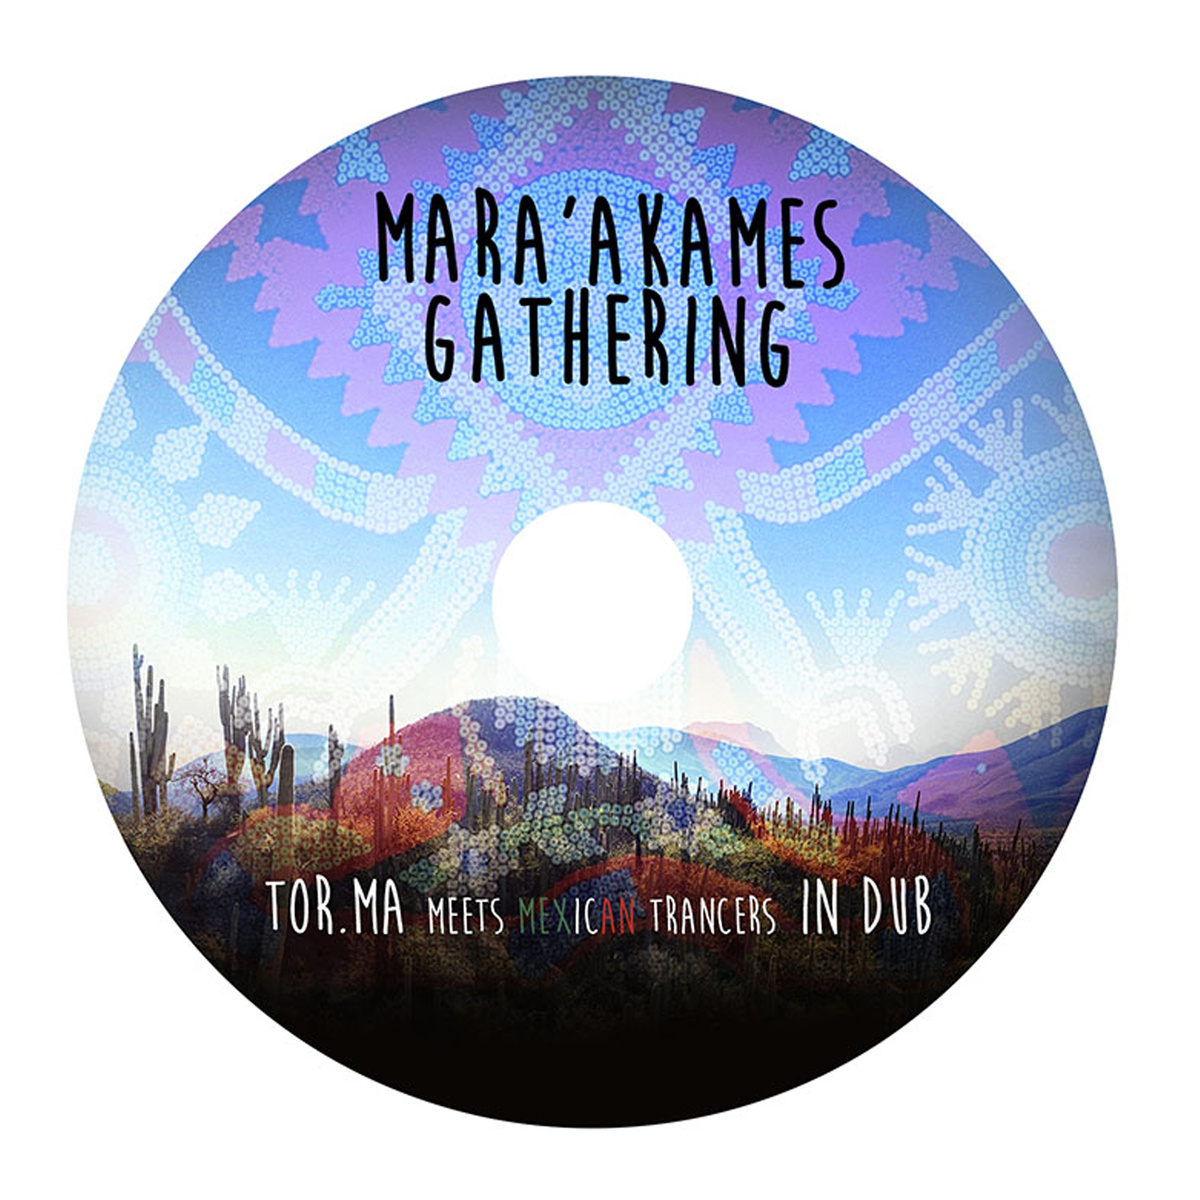 Tor.Ma meets Mexican trancers in Dub – Mara’akames Gathering